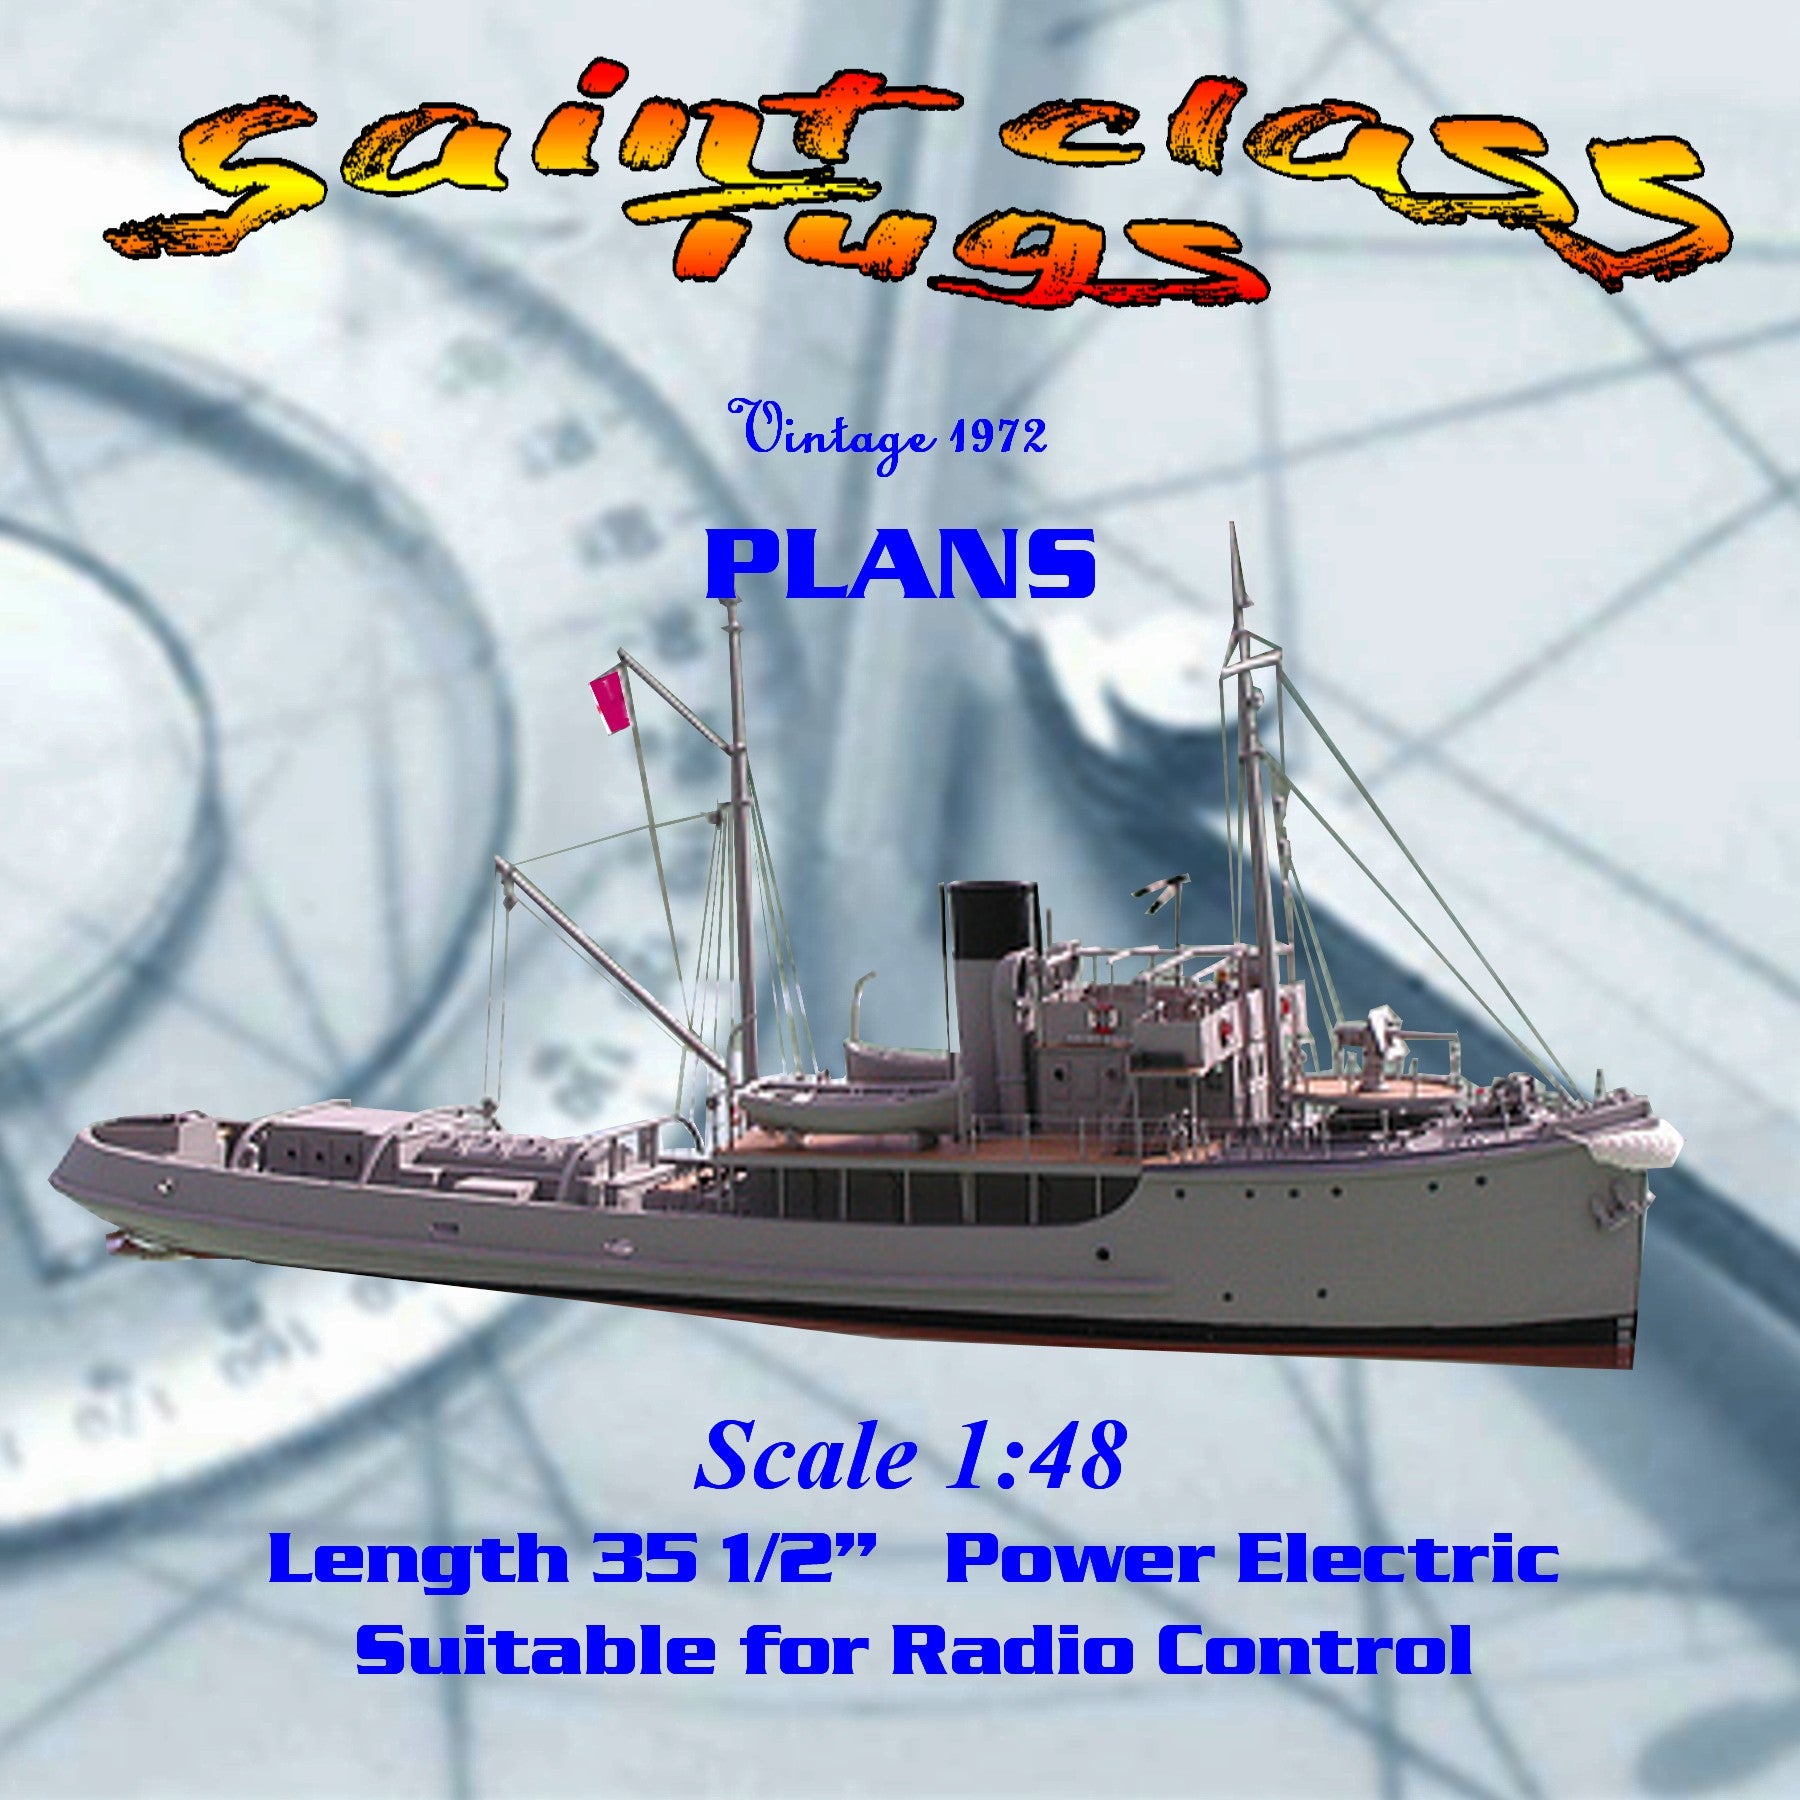 full size printed plan 1/48 scale 35 1/4" radio control saint class tug